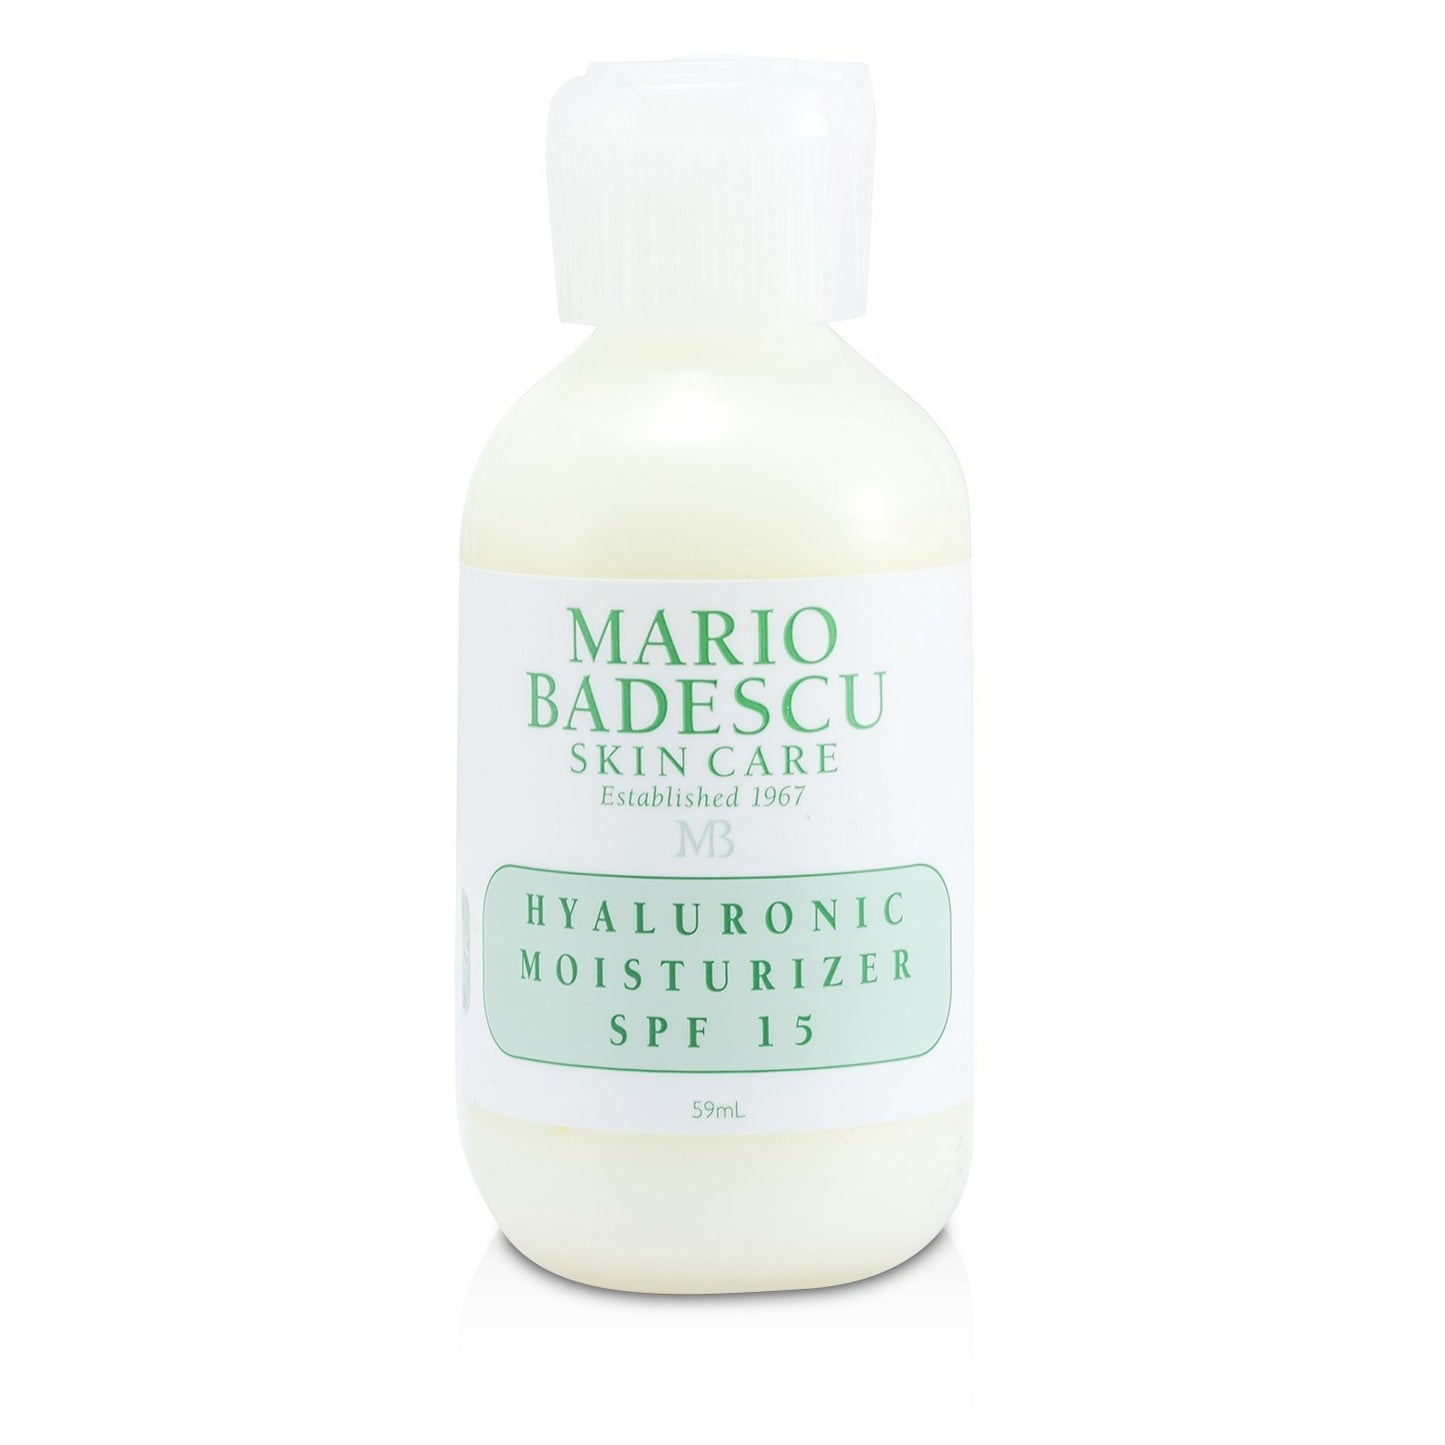 MARIO BADESCU - Hyaluronic Moisturizer SPF 15 - For Combination/ Dry/ Sensitive Skin Types 90012 59ml/2oz